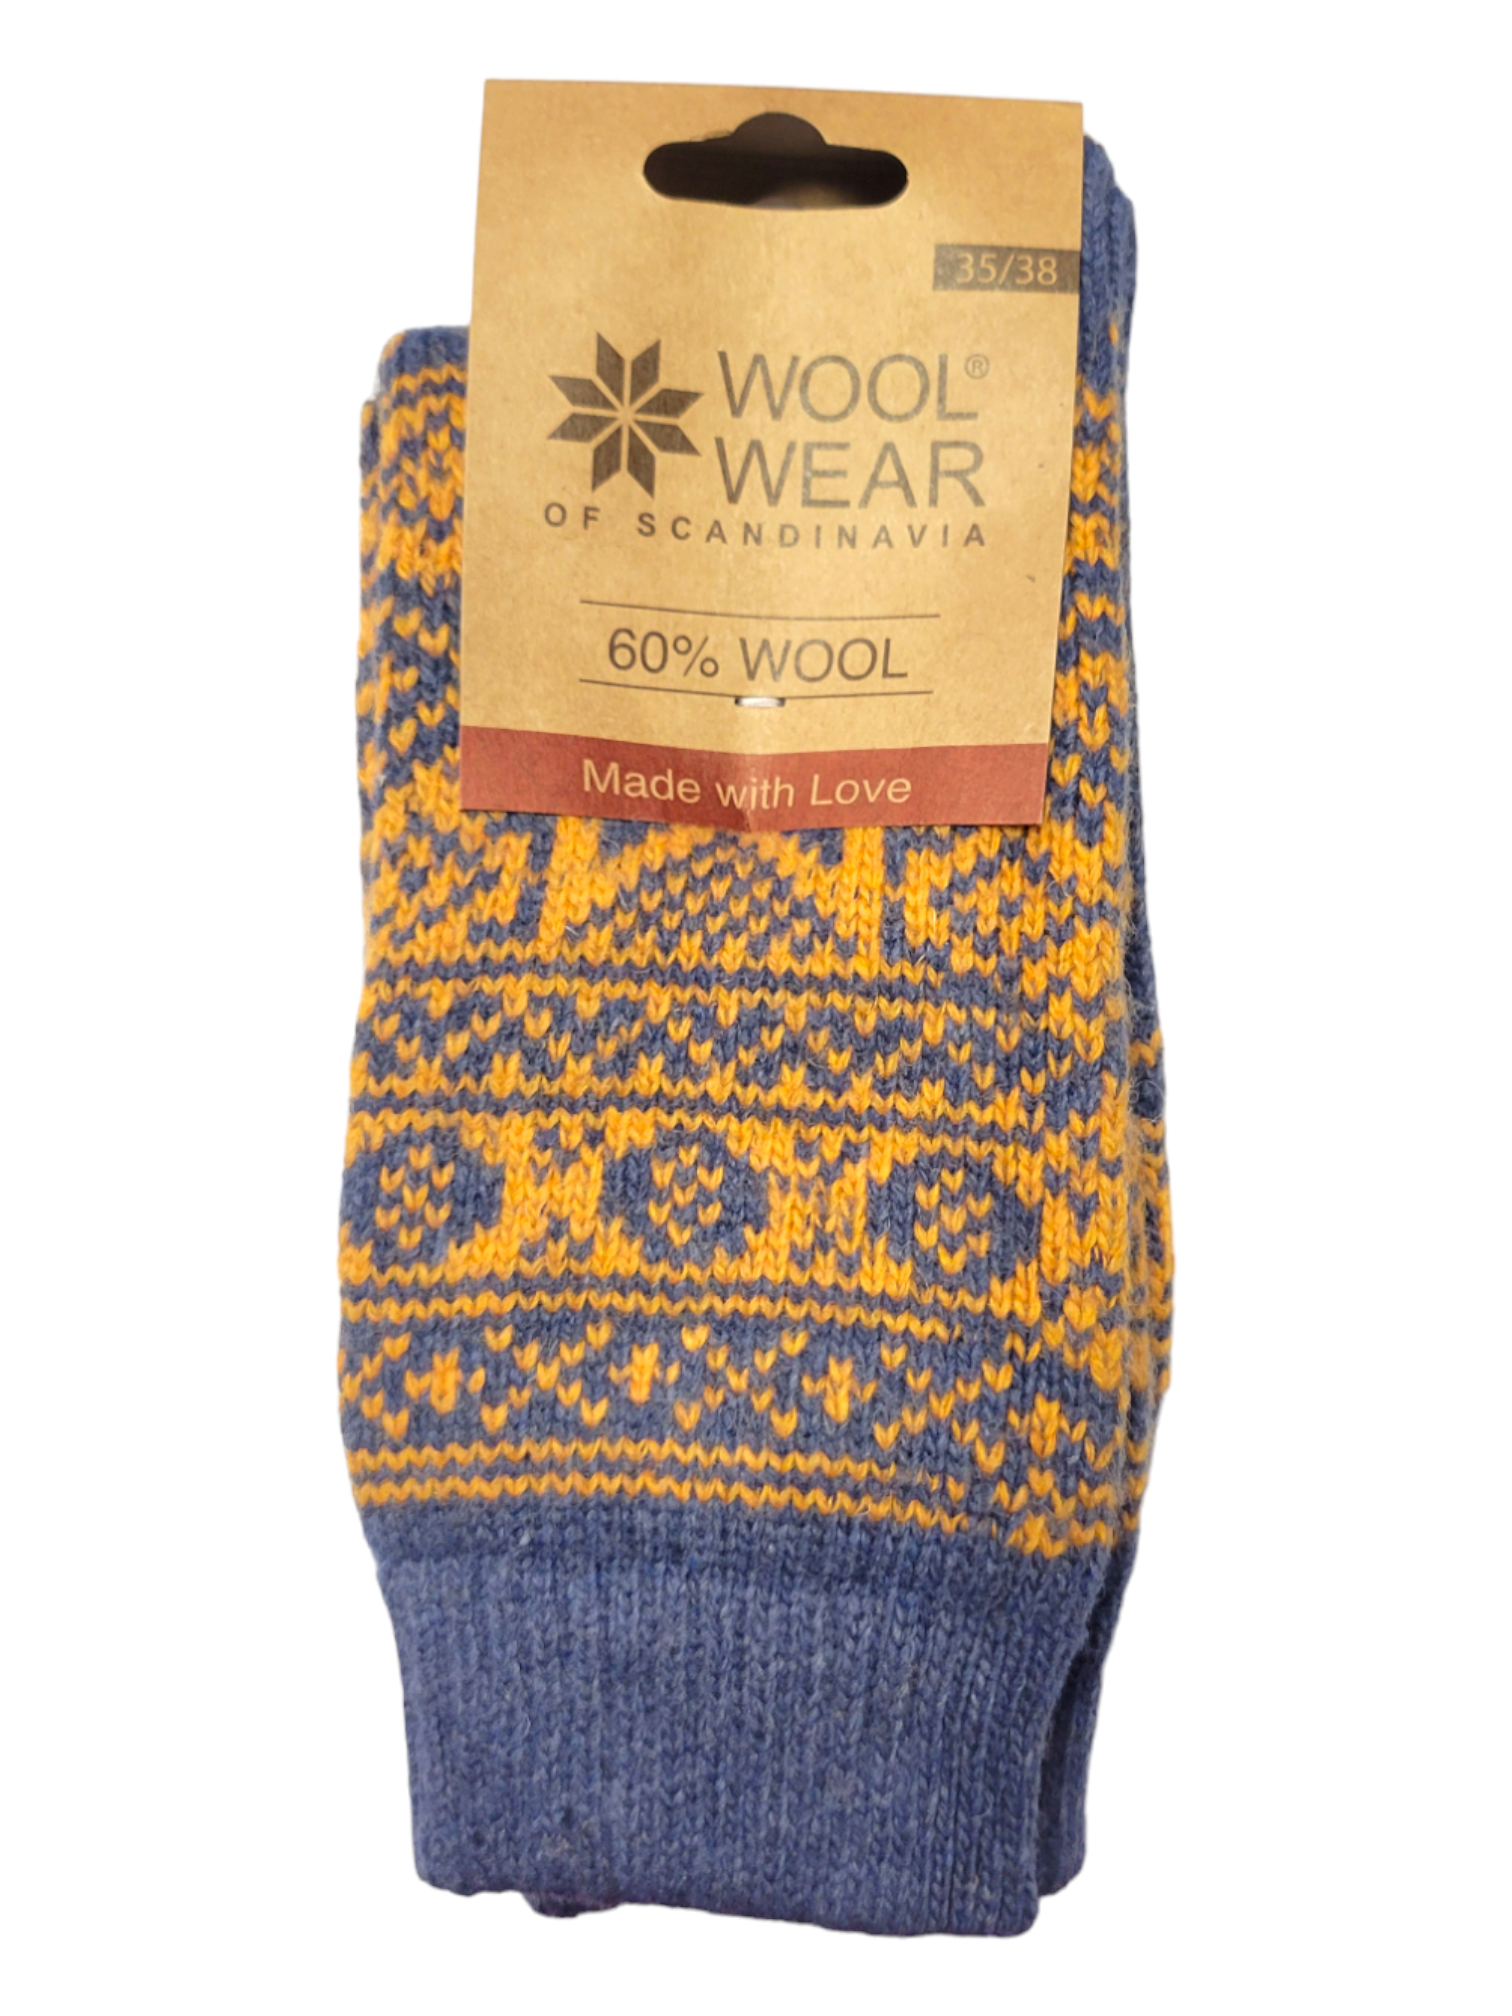 Socks: Wool Wear - Denim w/ Gold Pattern, Selbu Star, 60% Wool